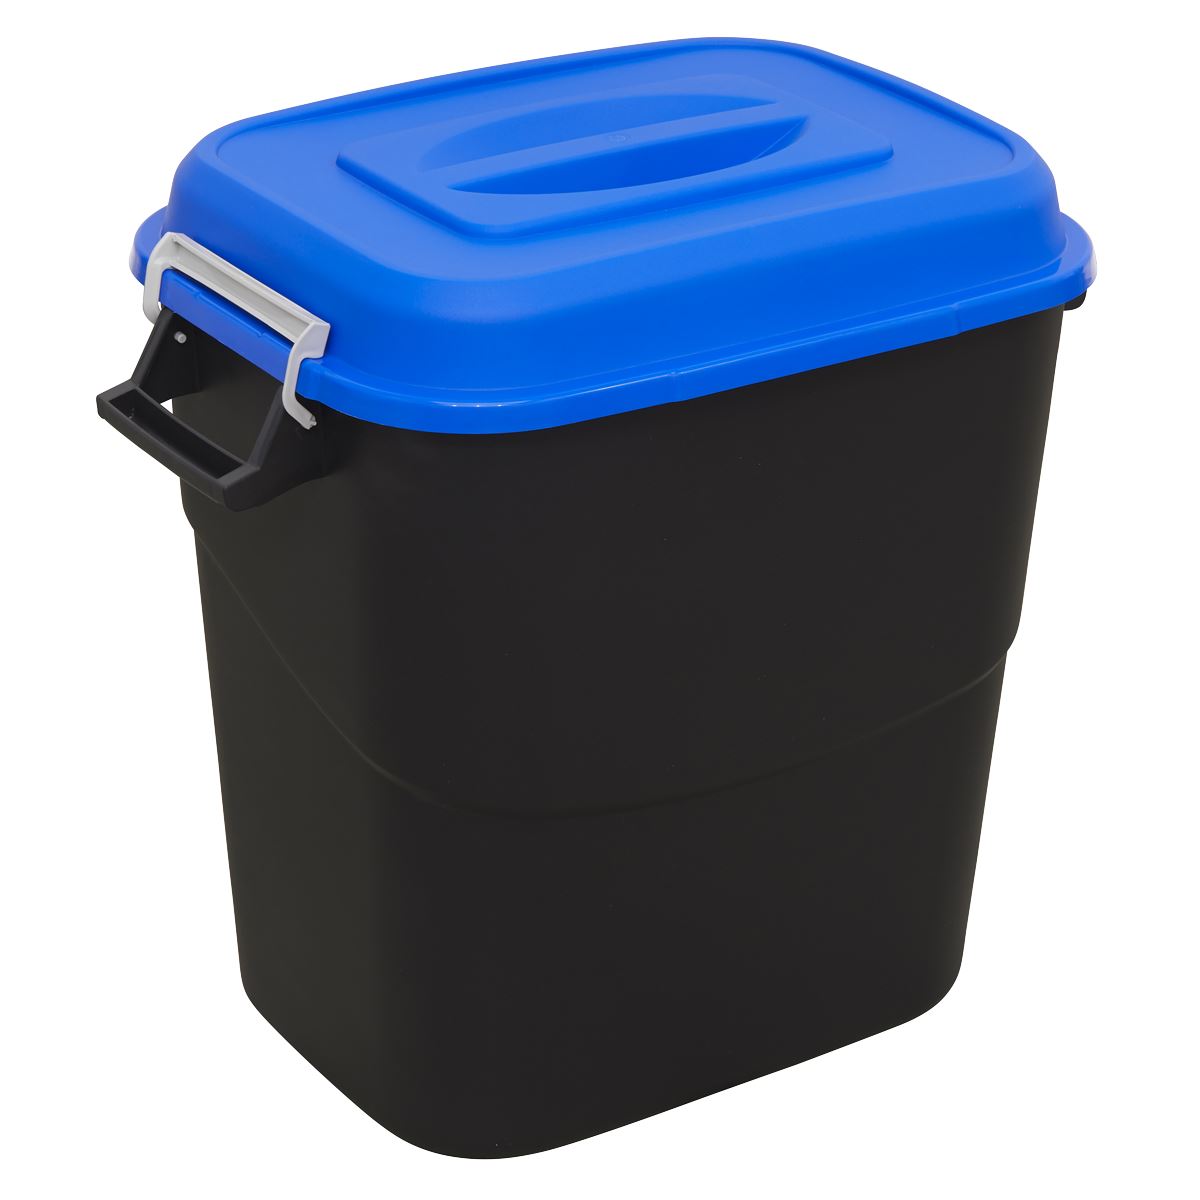 Sealey Refuse/Storage Bin 75L - Blue